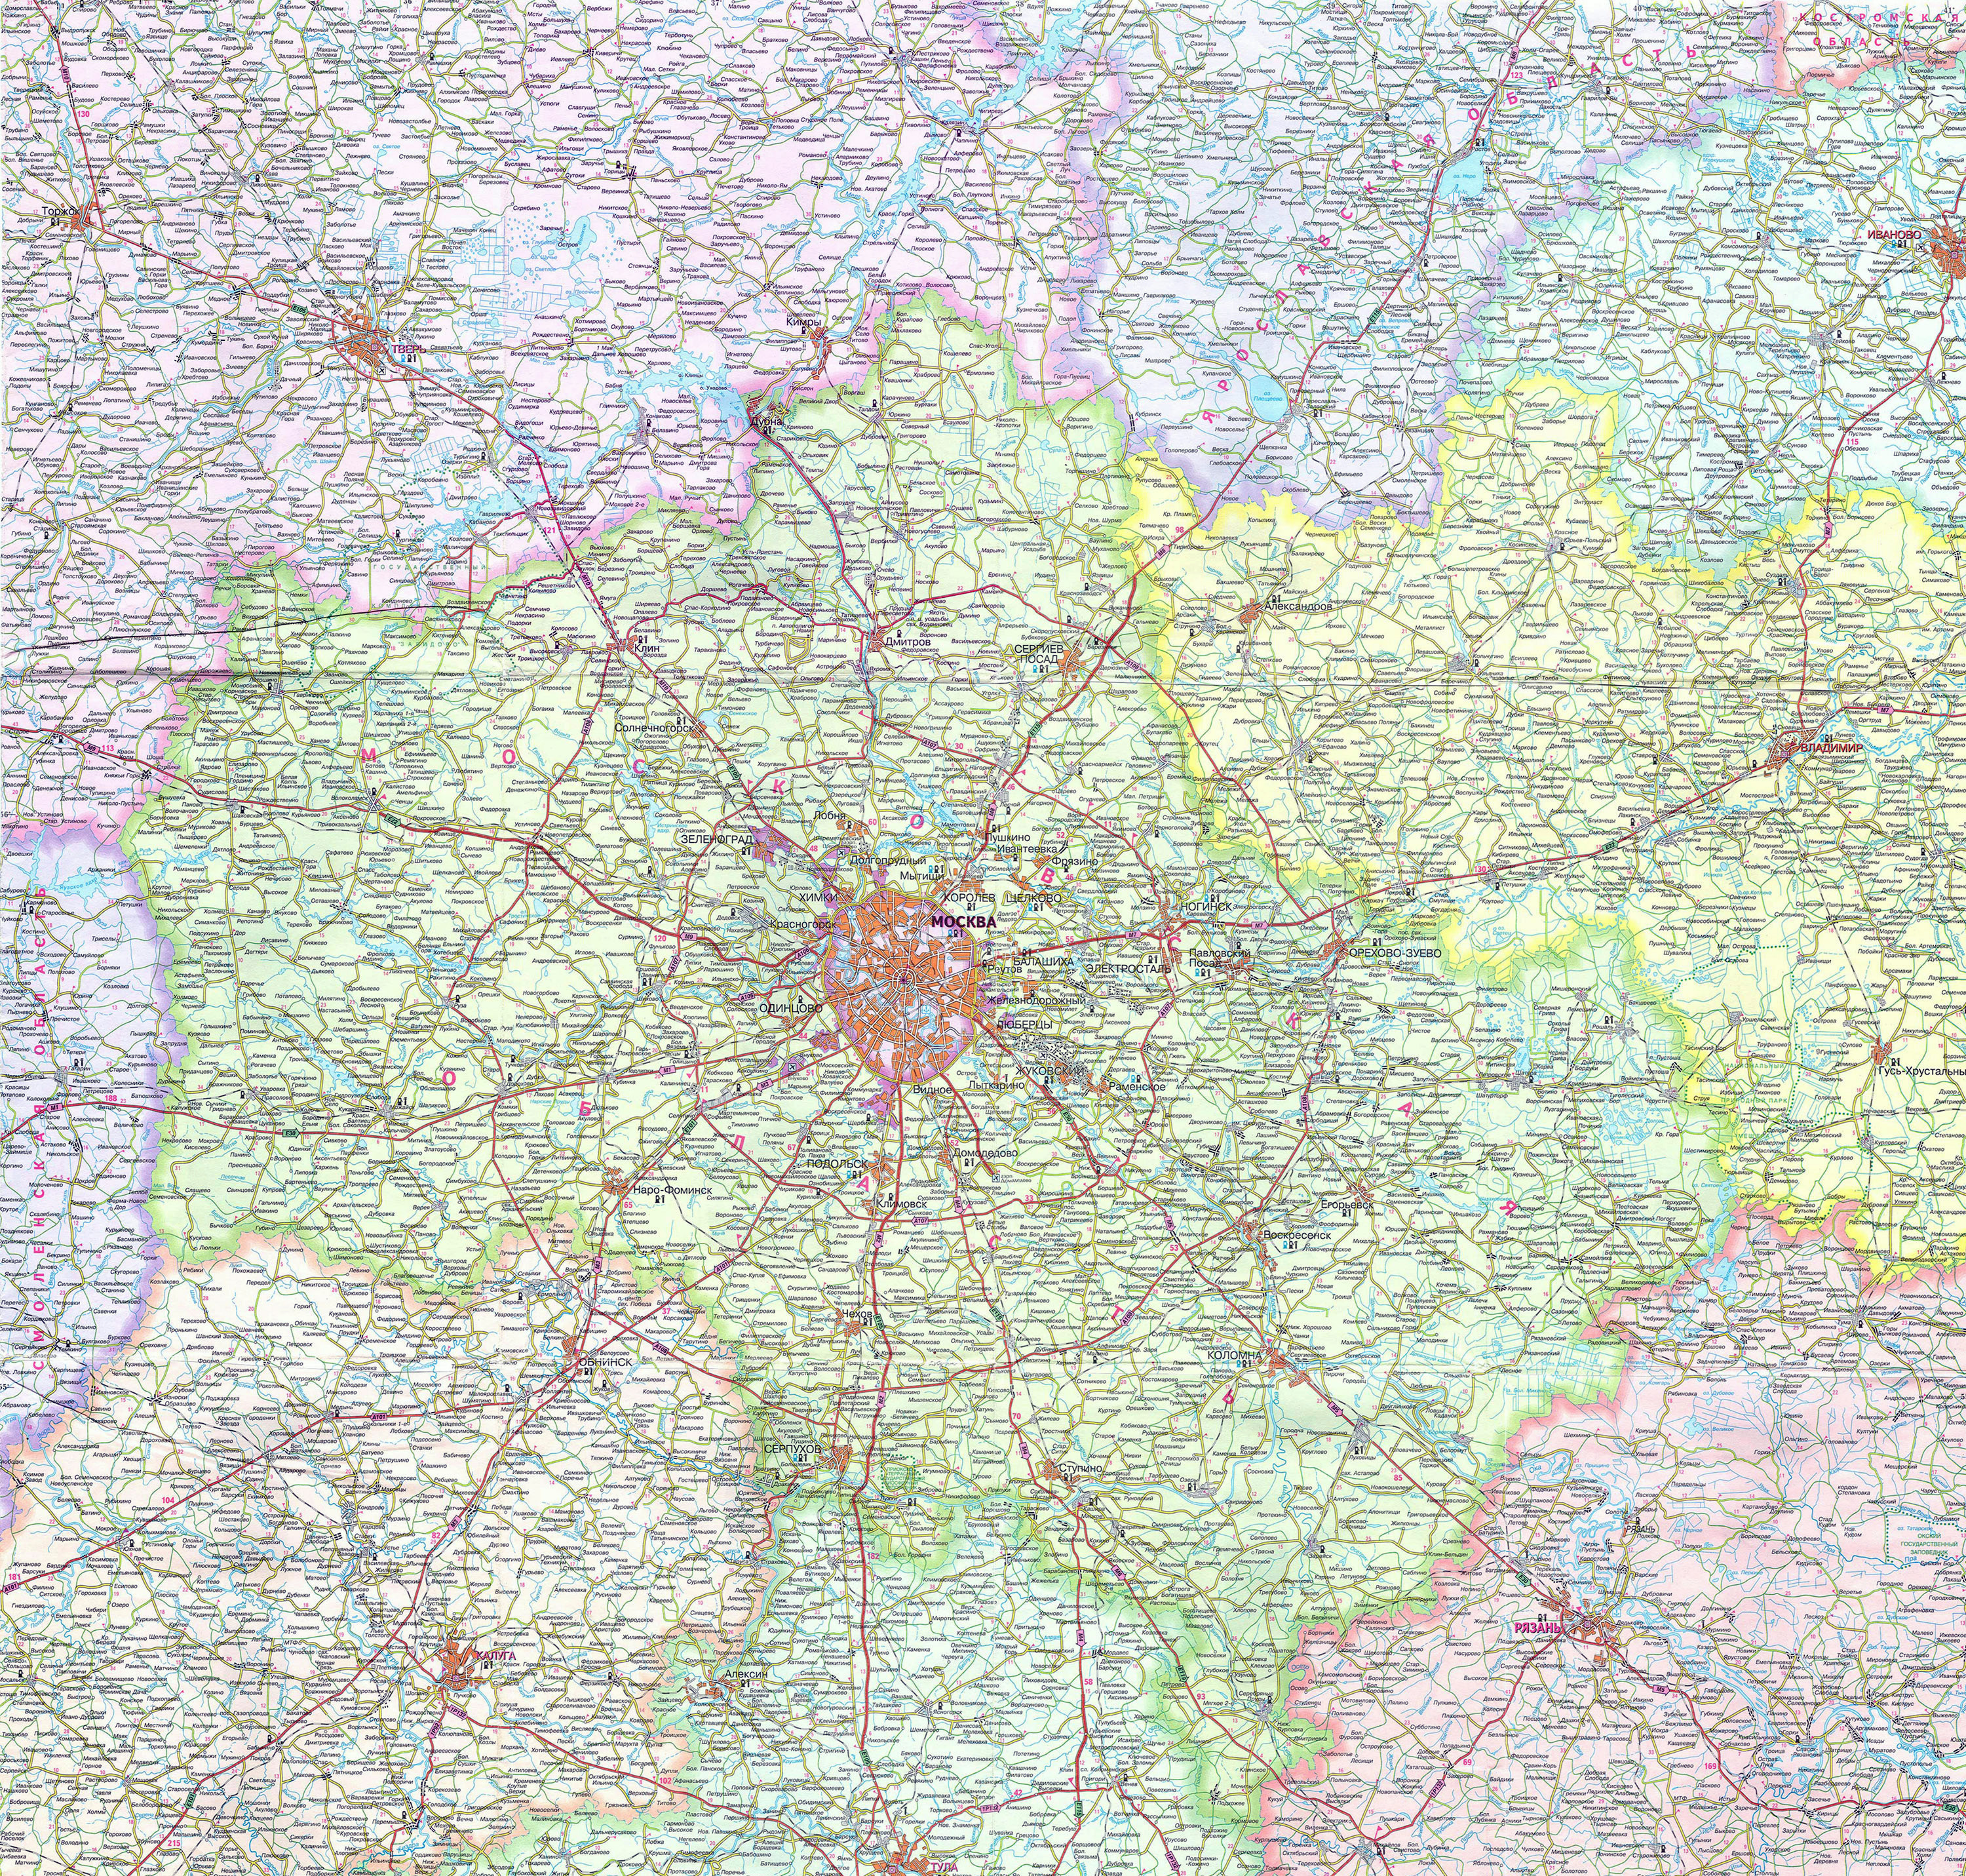 Подробная Карта Москвы На Фото